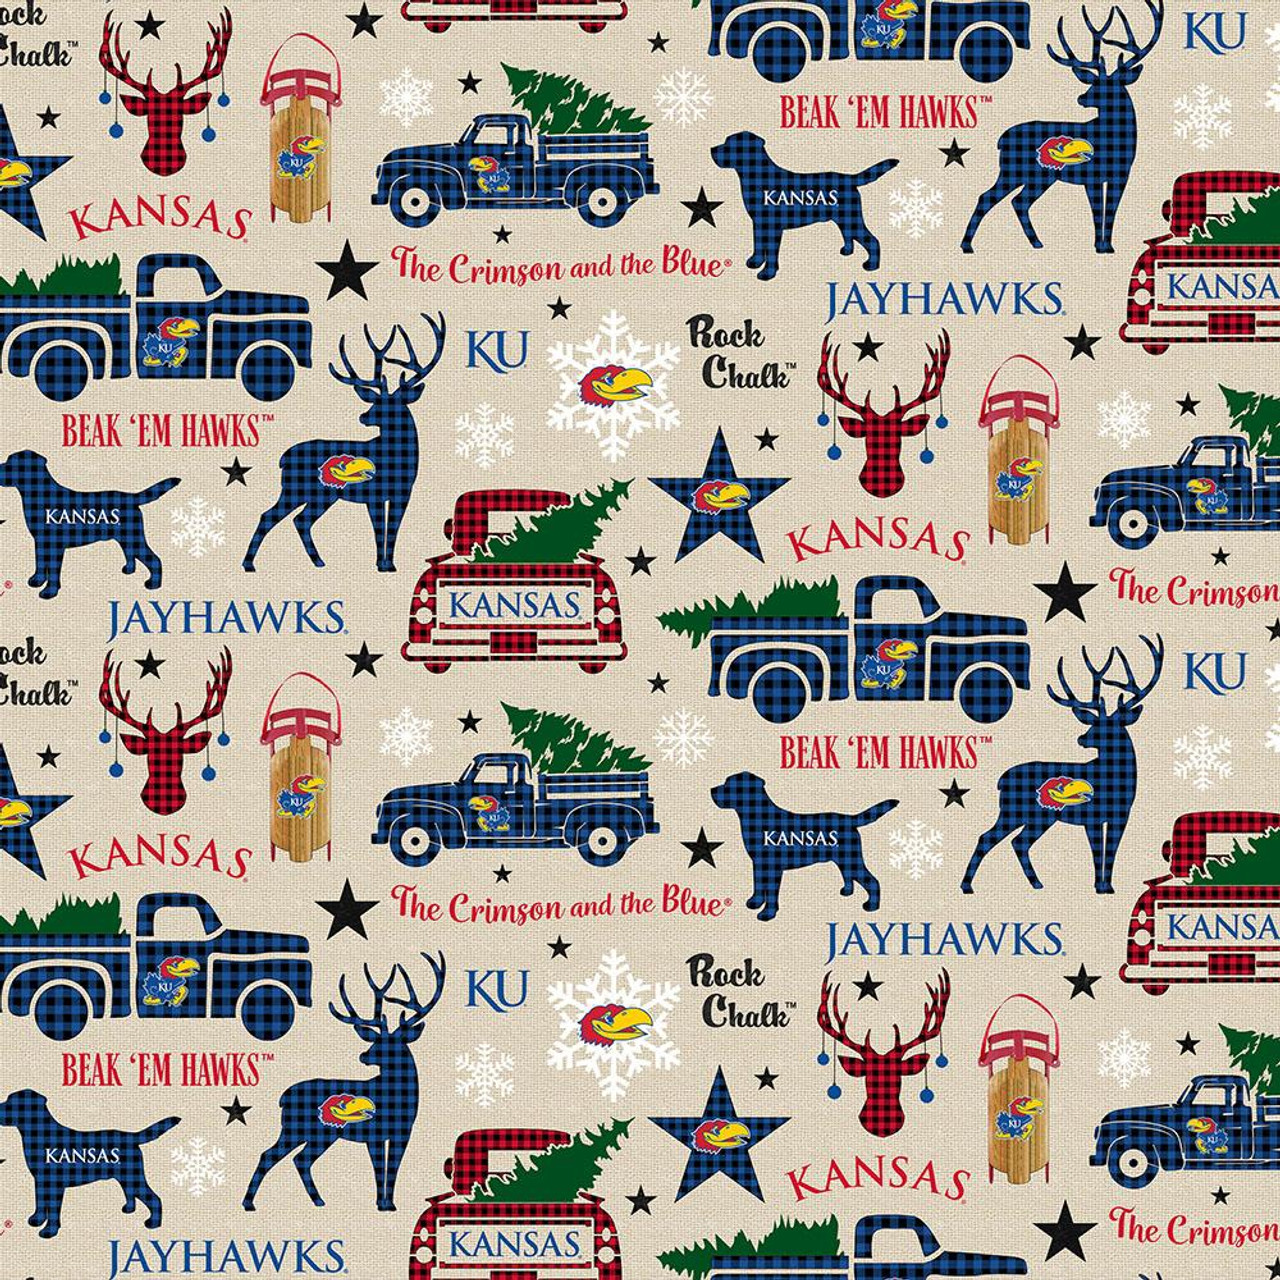 University of Kansas Jayhawks Cotton Fabric with Christmas Print or Matching Solid Cotton Fabrics